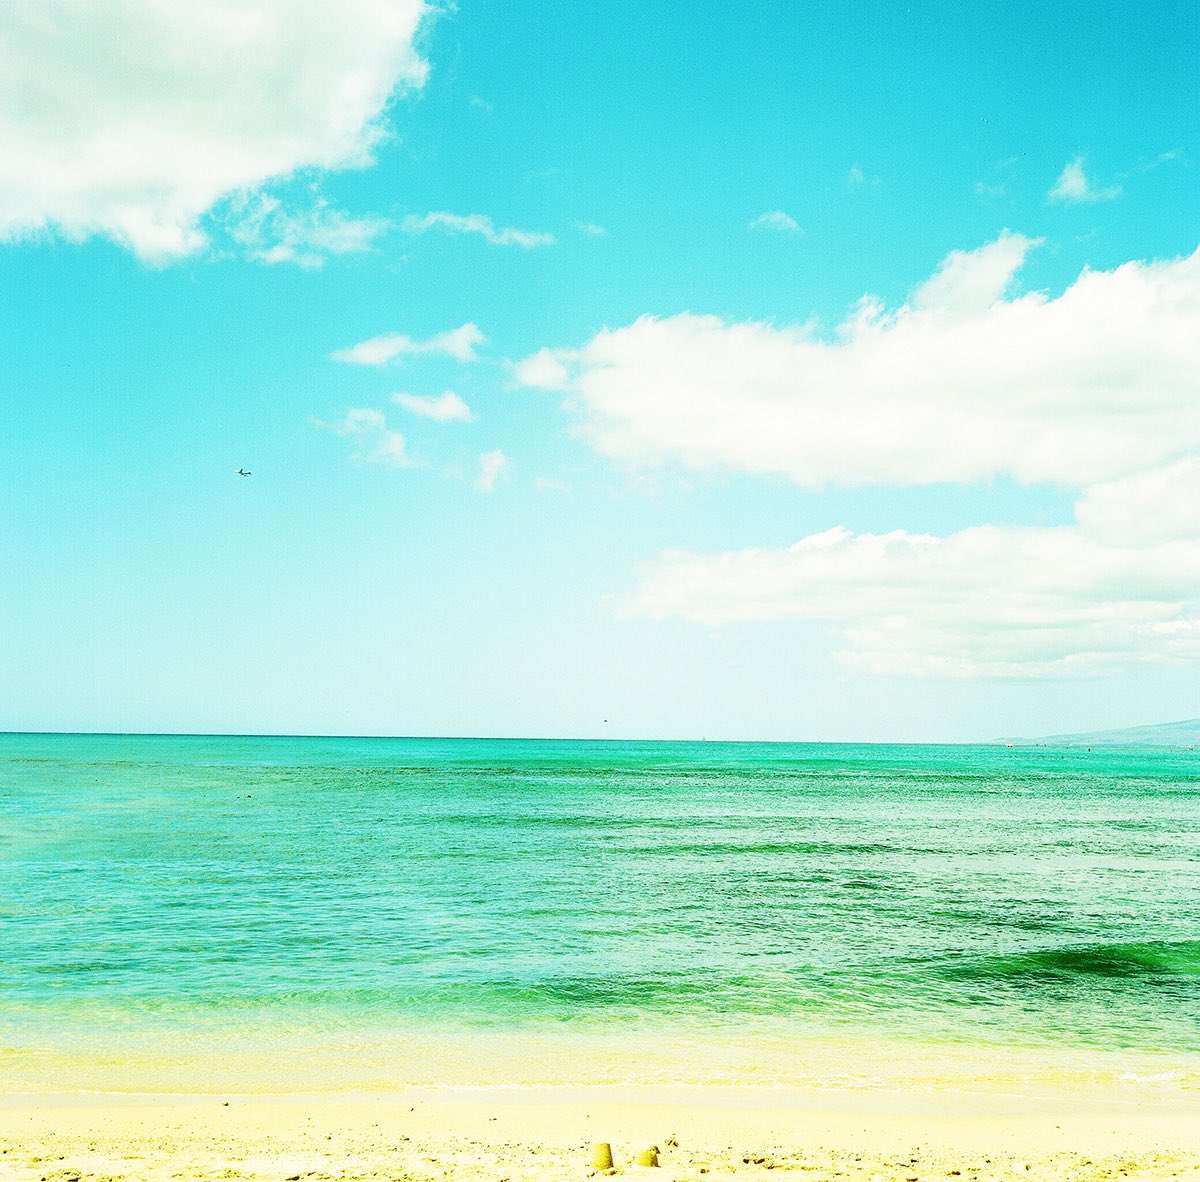 WAIKIKI PHOTOGRAPH
beautiful beach , oaf
#hawaii 
#oafu 
#beautifulbeach 
#waikiki 
#ワイキキ
#skyandsea 
#beautifulsky 
#オアフ島 
#energyplace 
#filmphotography 
#filmcamera 
#rolleiflex 
#rolleiflex28f 
#ローライフレックス 
#ローライフレックス28f 
#waikiki_inc_photograph